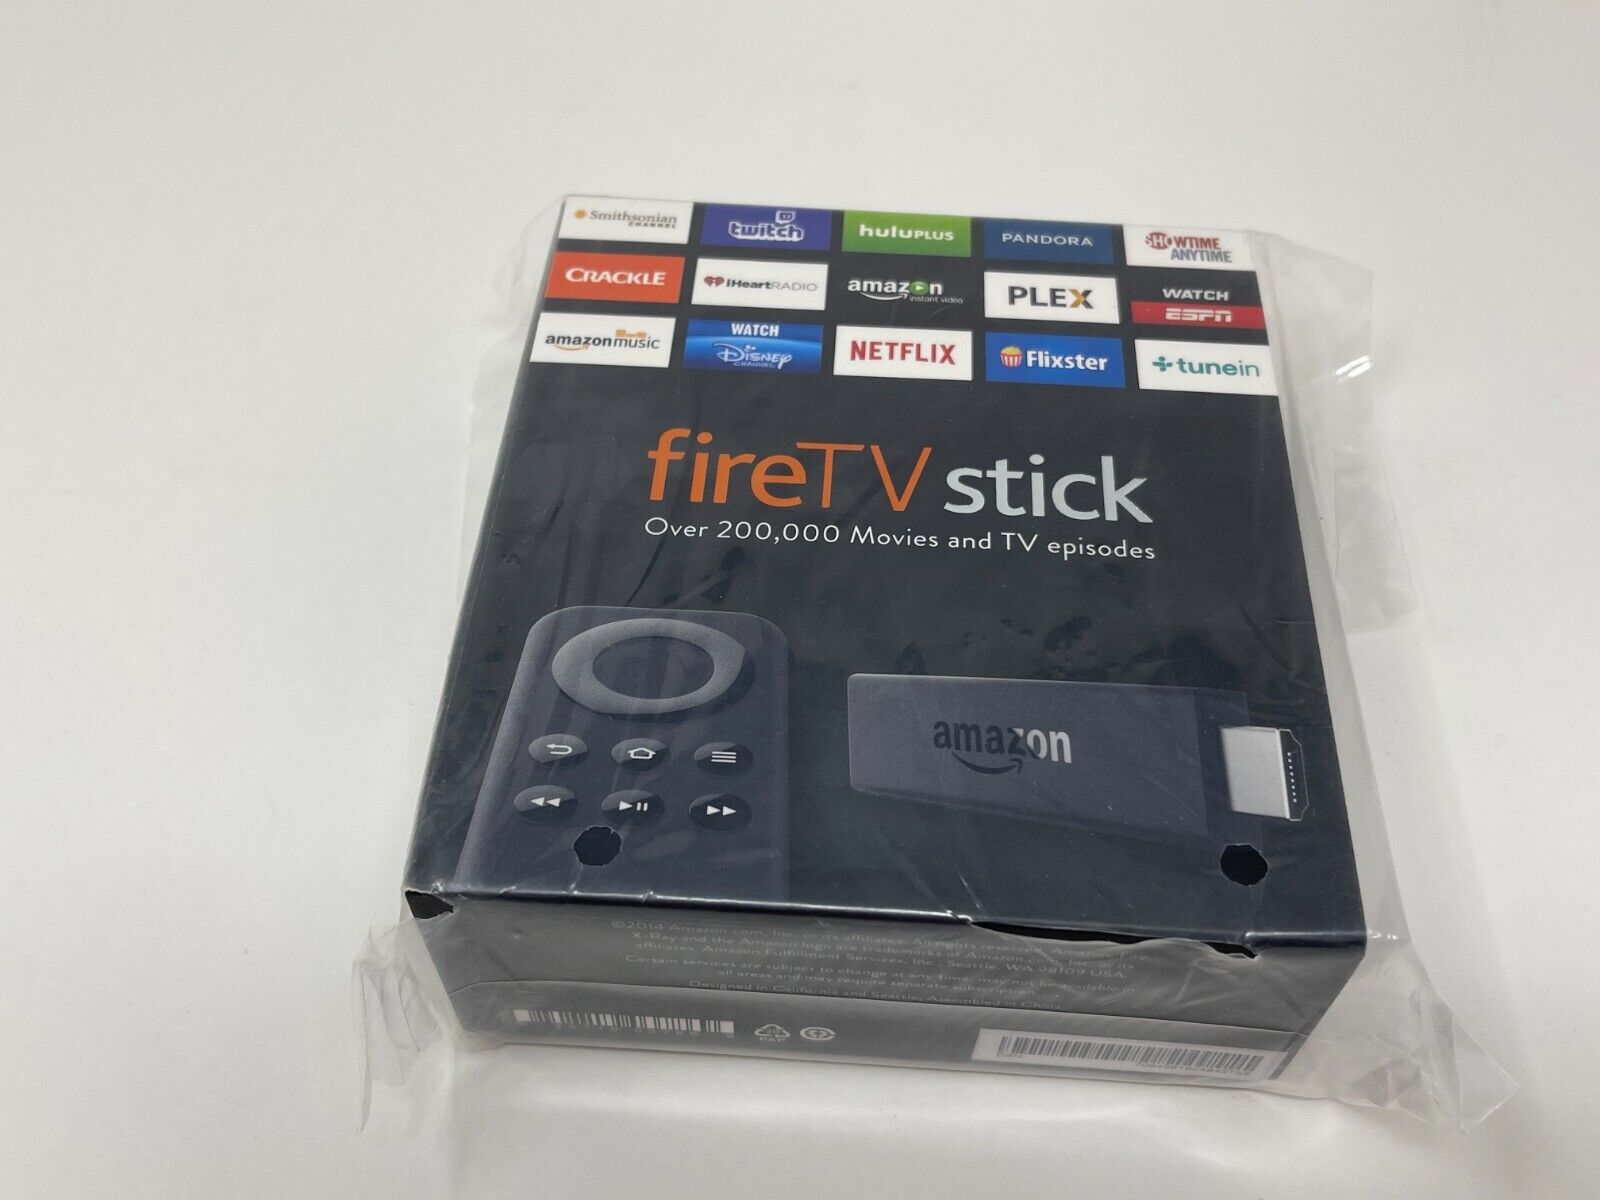 Amazon Fire TV Stick (1st Generation) Media Streamer - Black for 